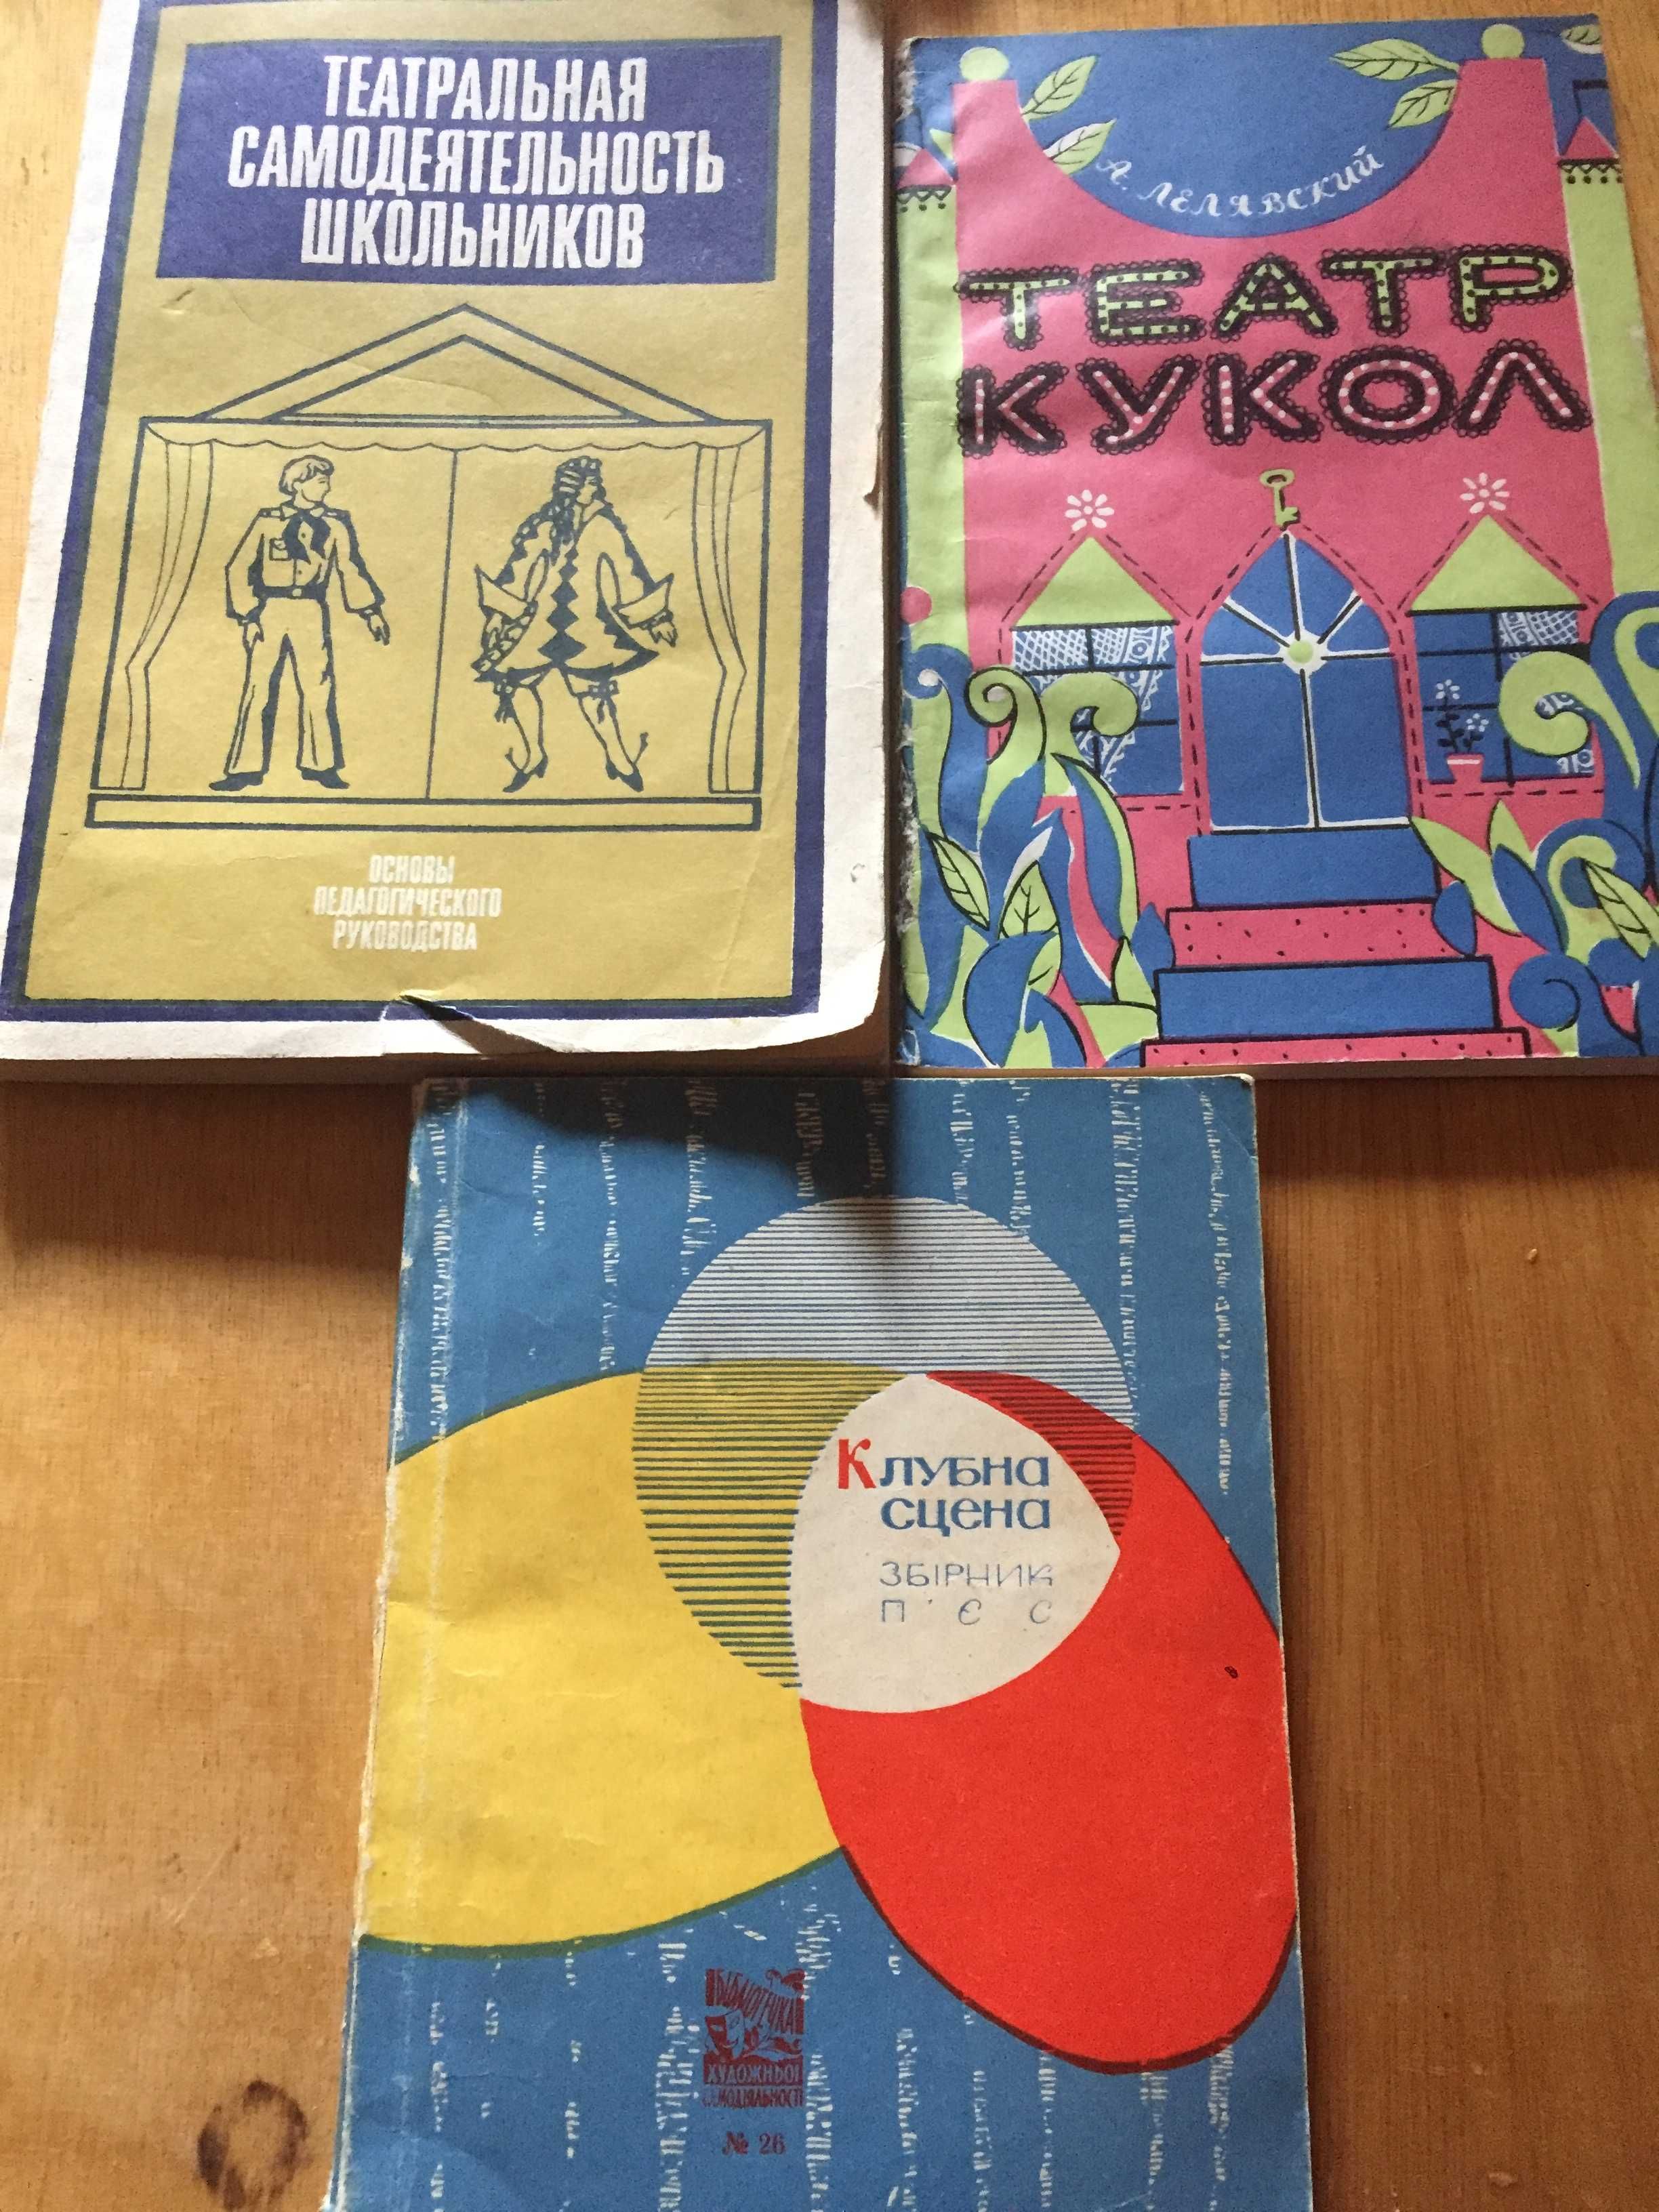 Журналы Мод 1950-1990 -80 шт.Книги про шитье, музыку, культуру, театр.